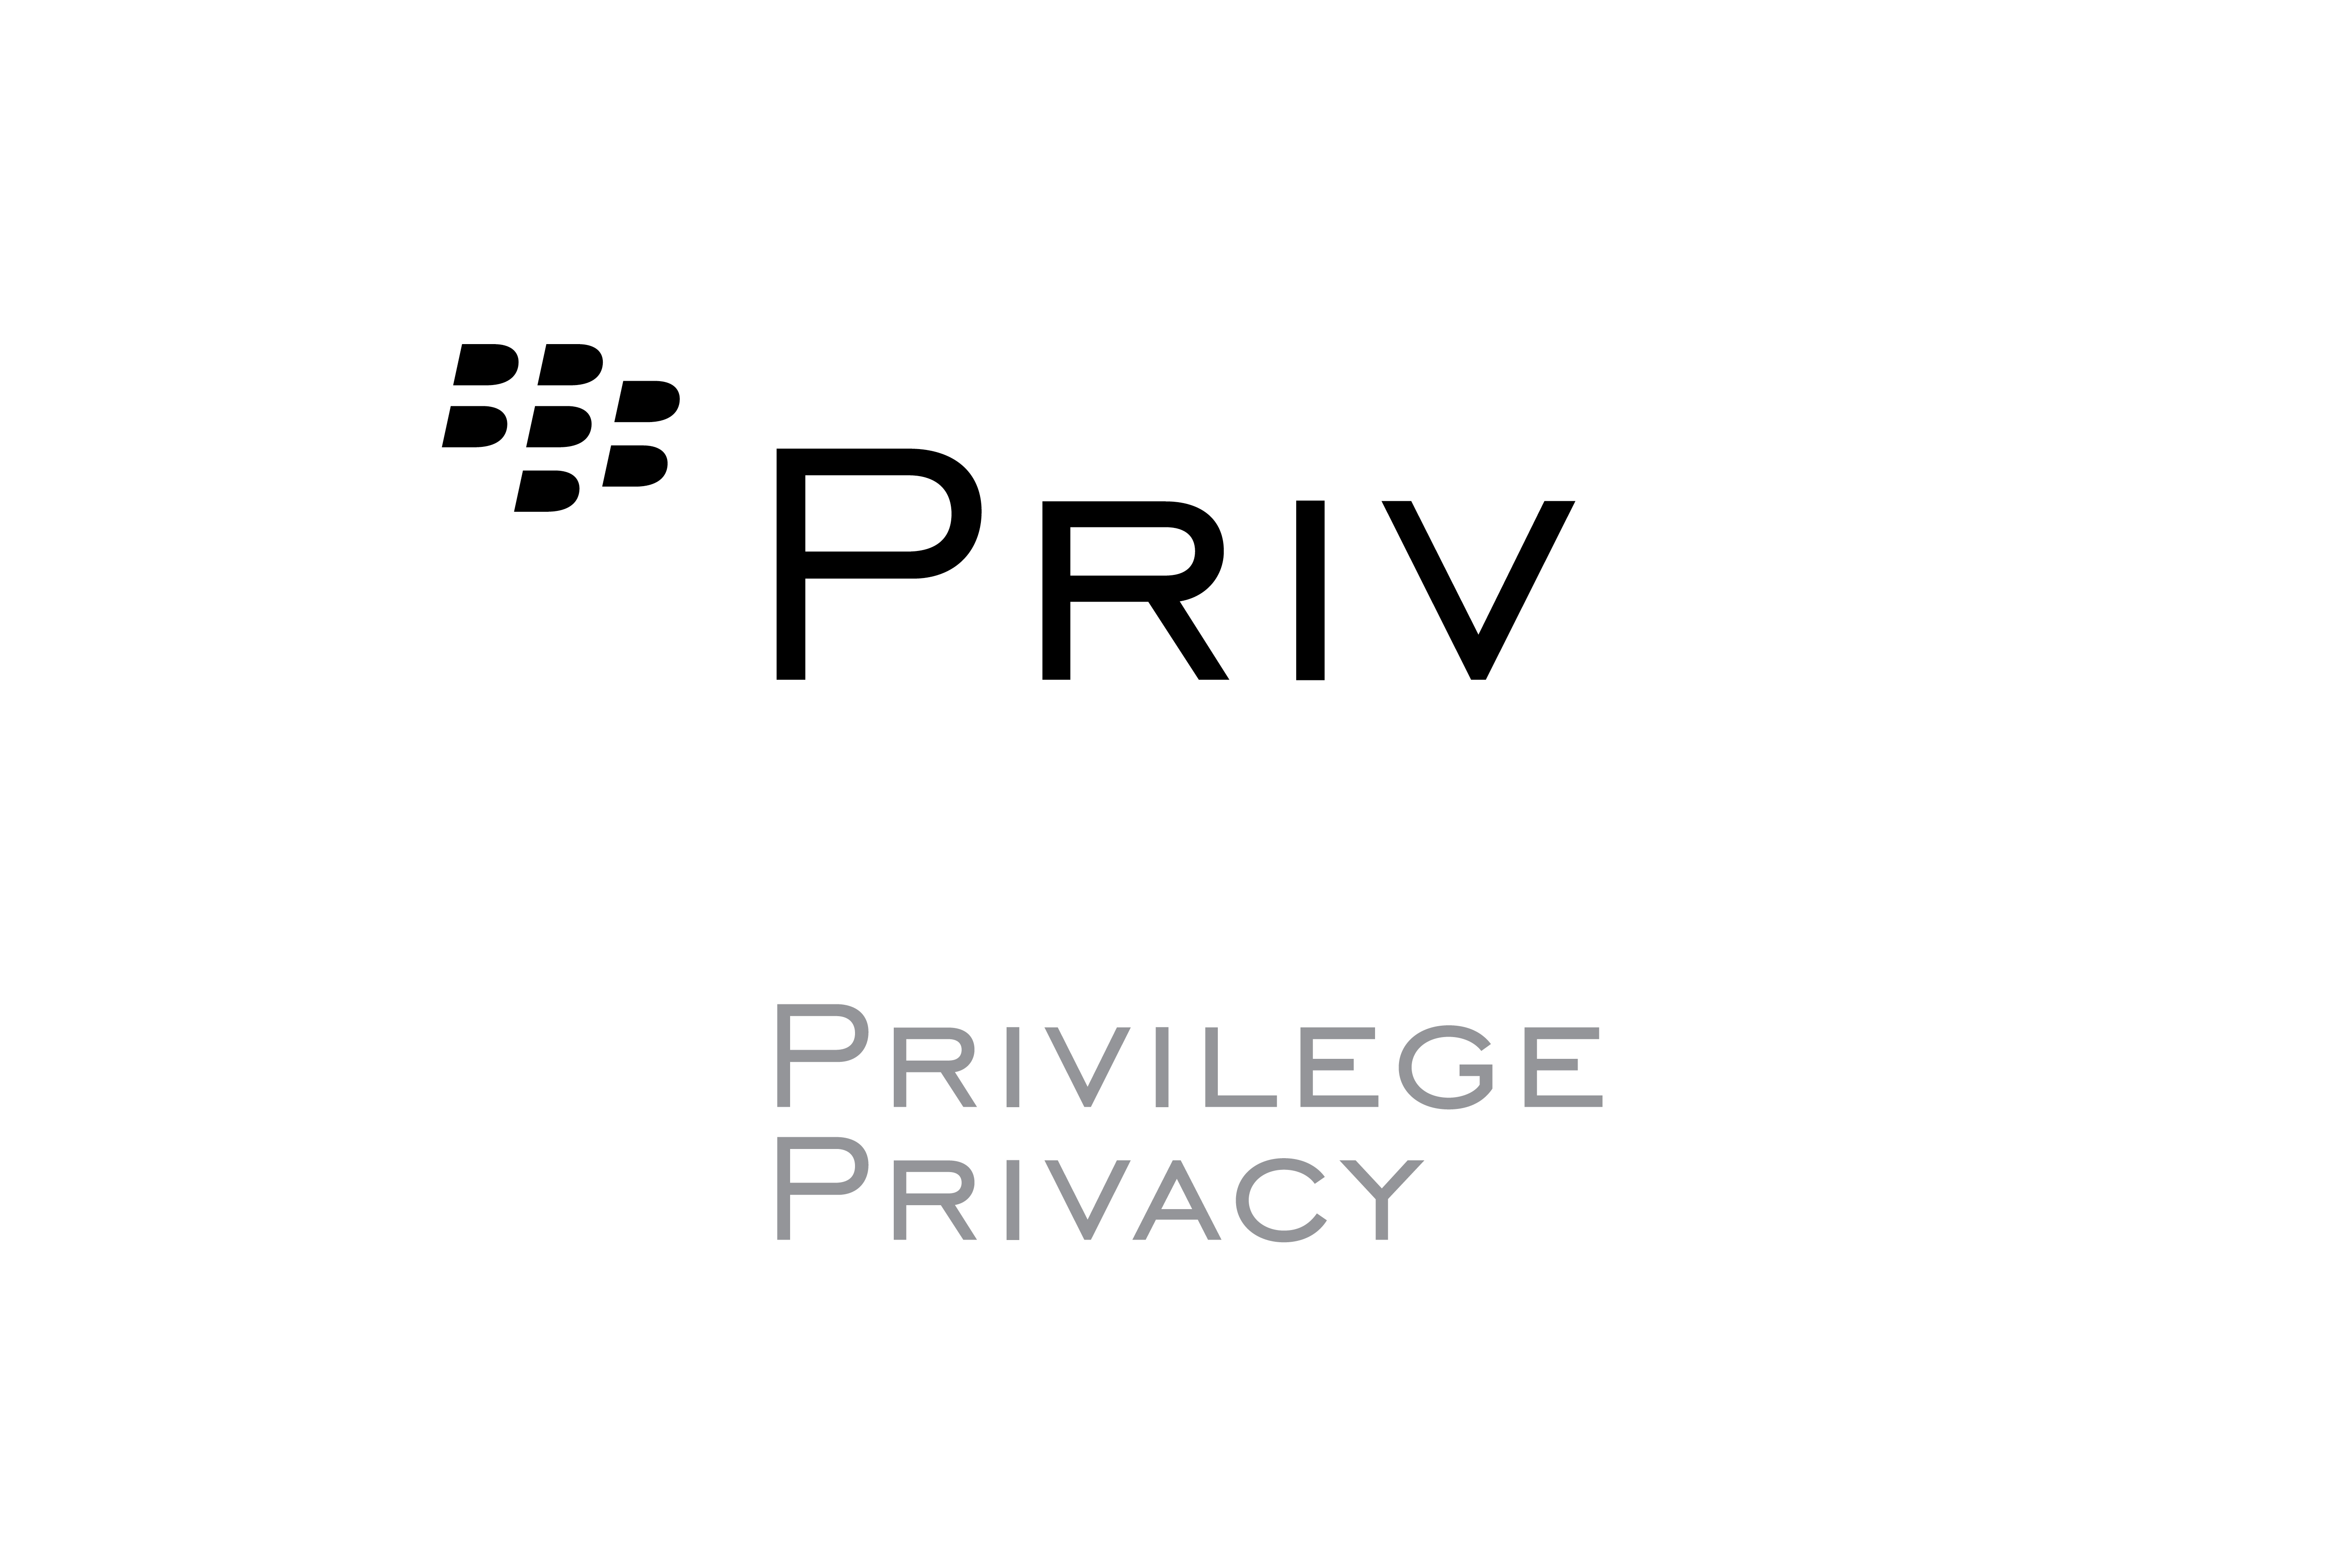 Blackberry Priv Logo PNG - 31029